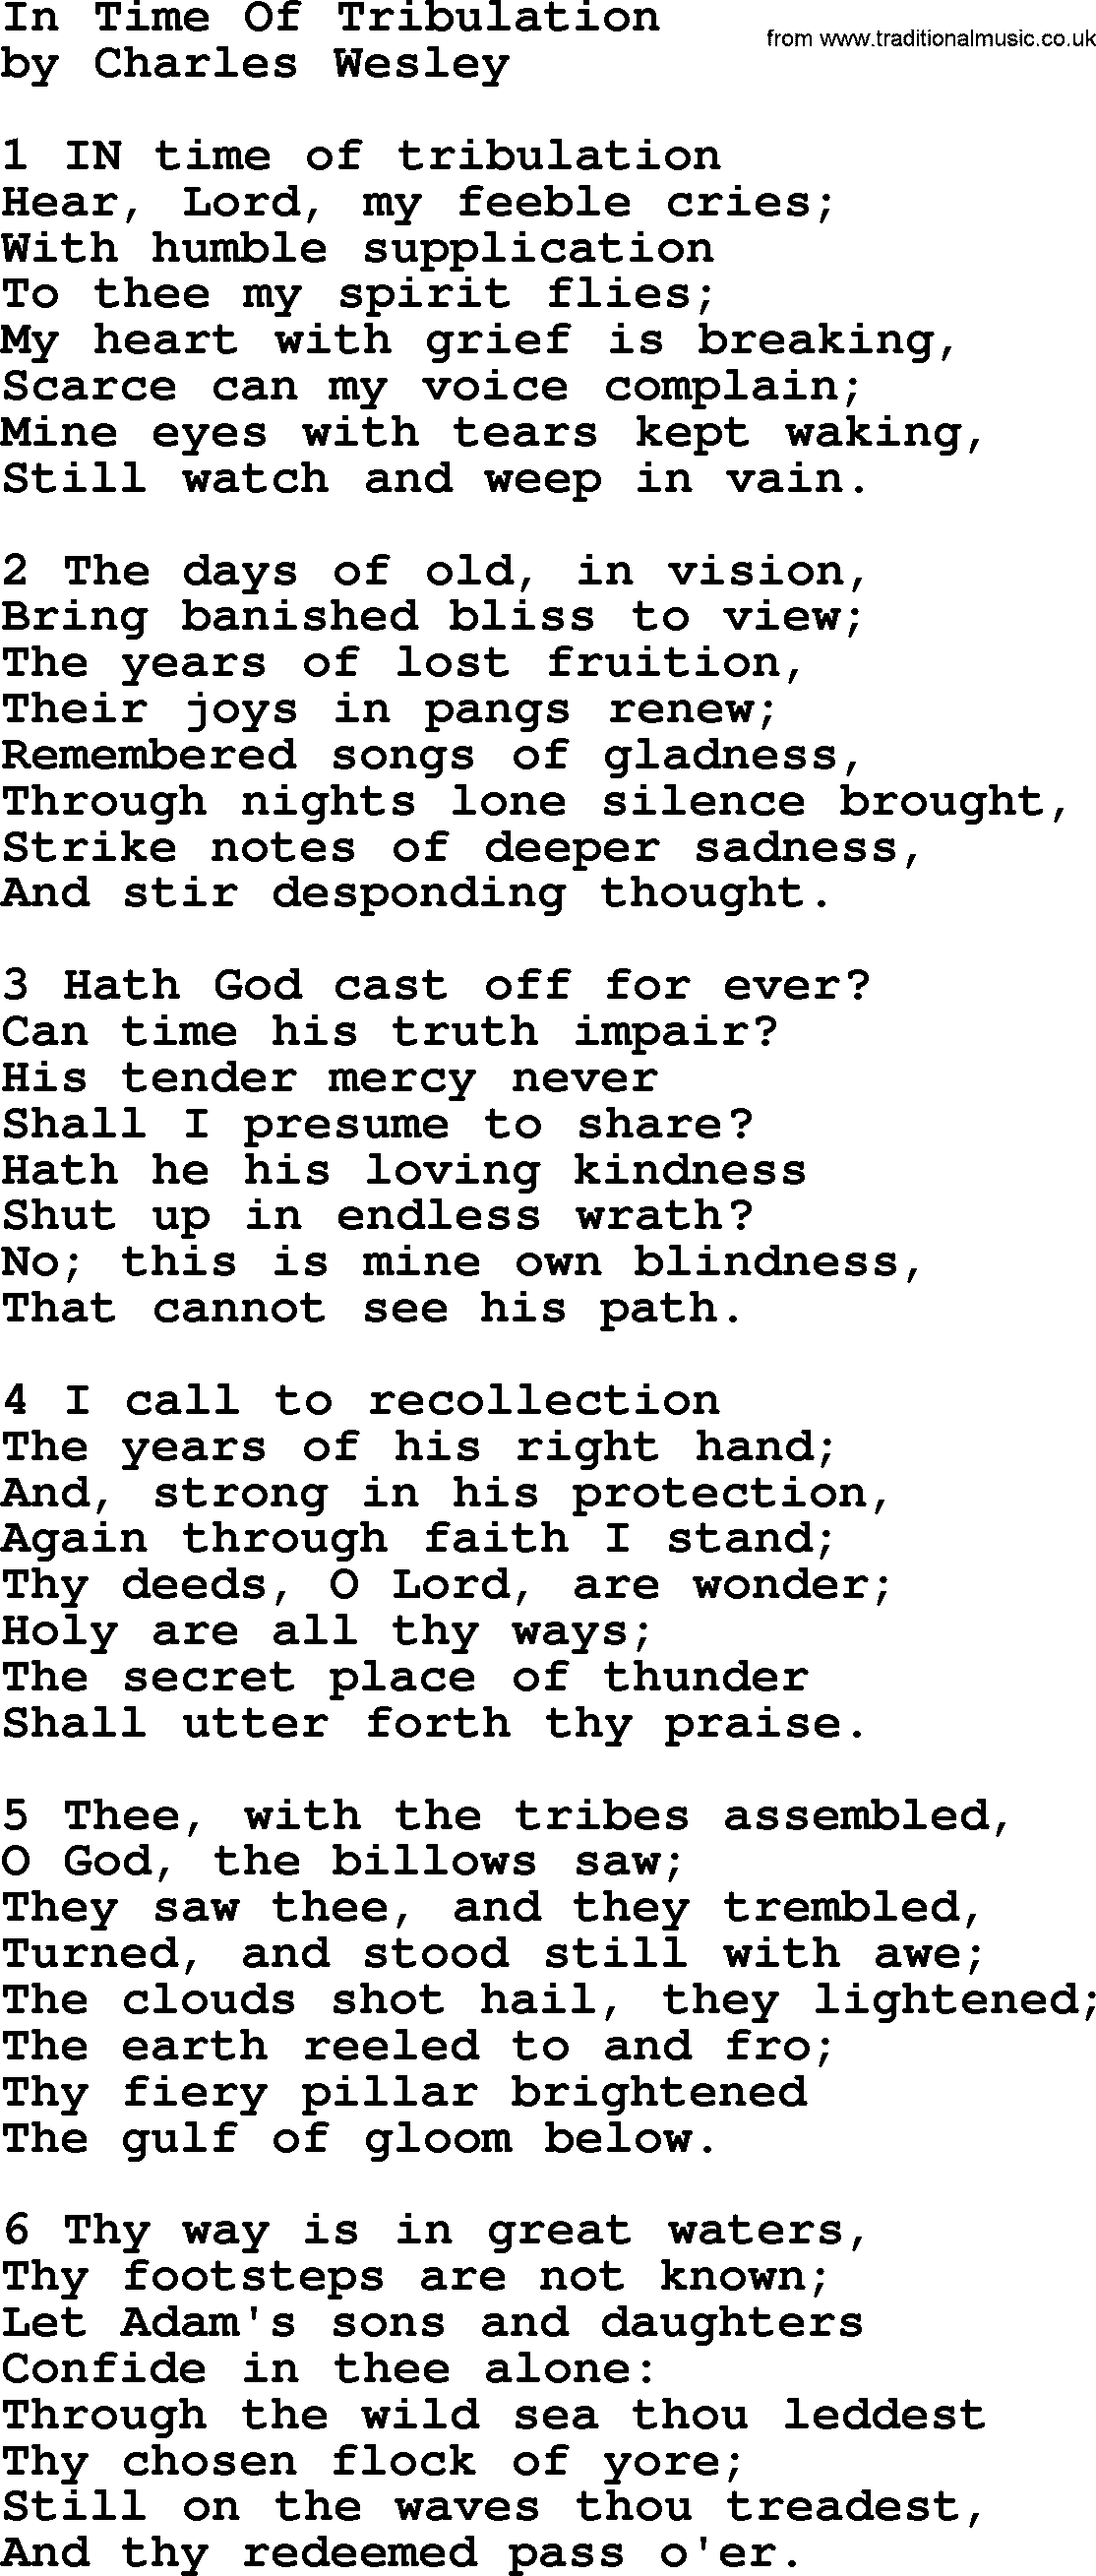 Charles Wesley hymn: In Time Of Tribulation, lyrics